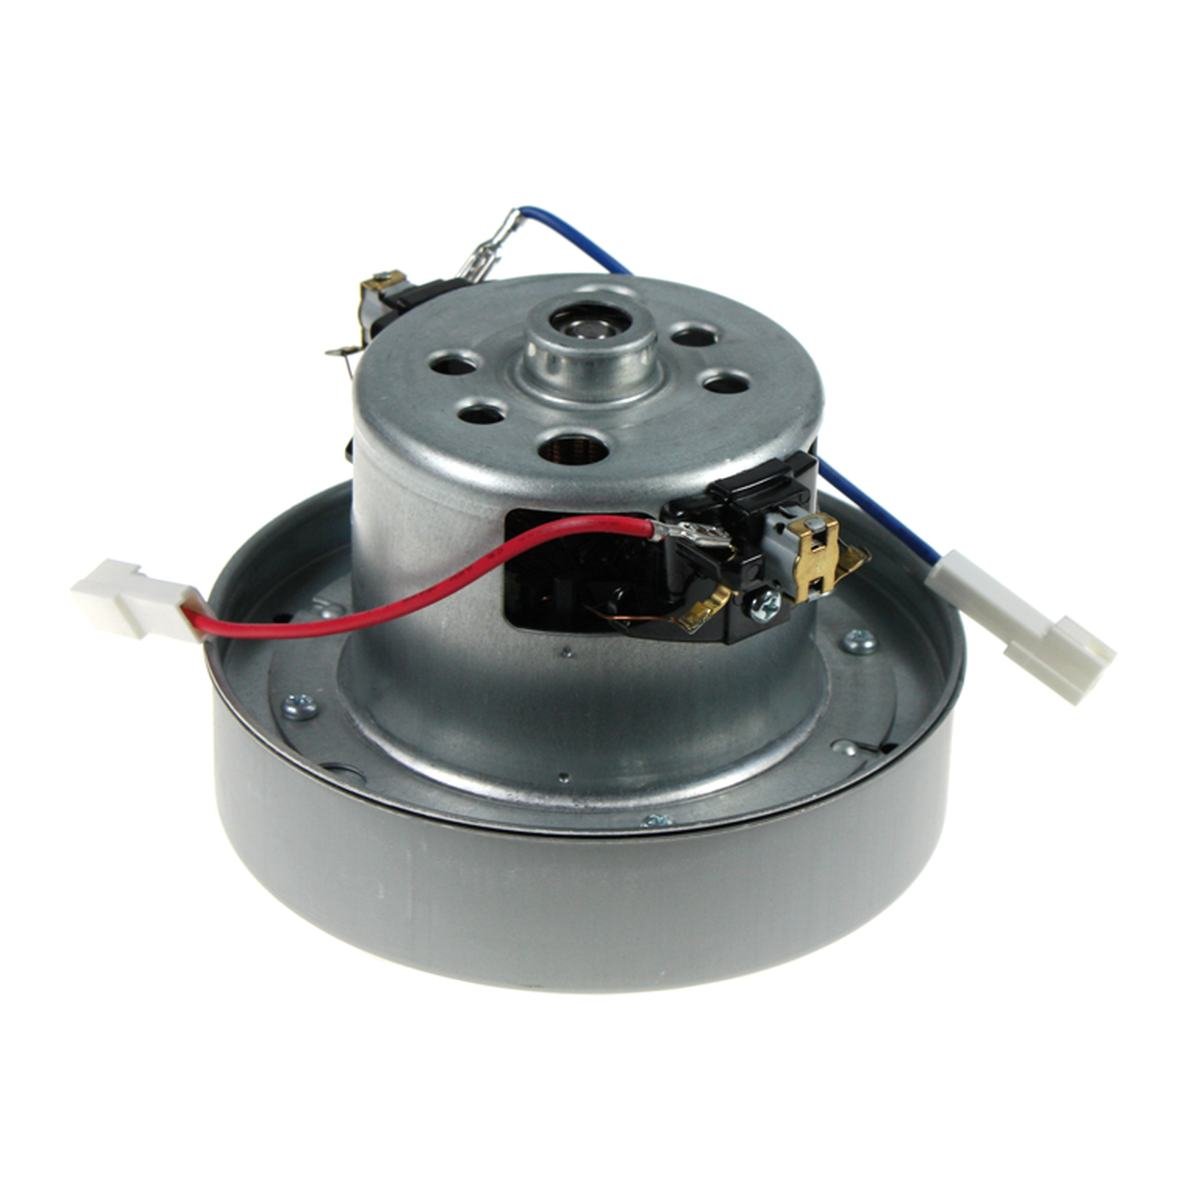 Støvsugermotor YDK med intern termosikring passer til Dyson